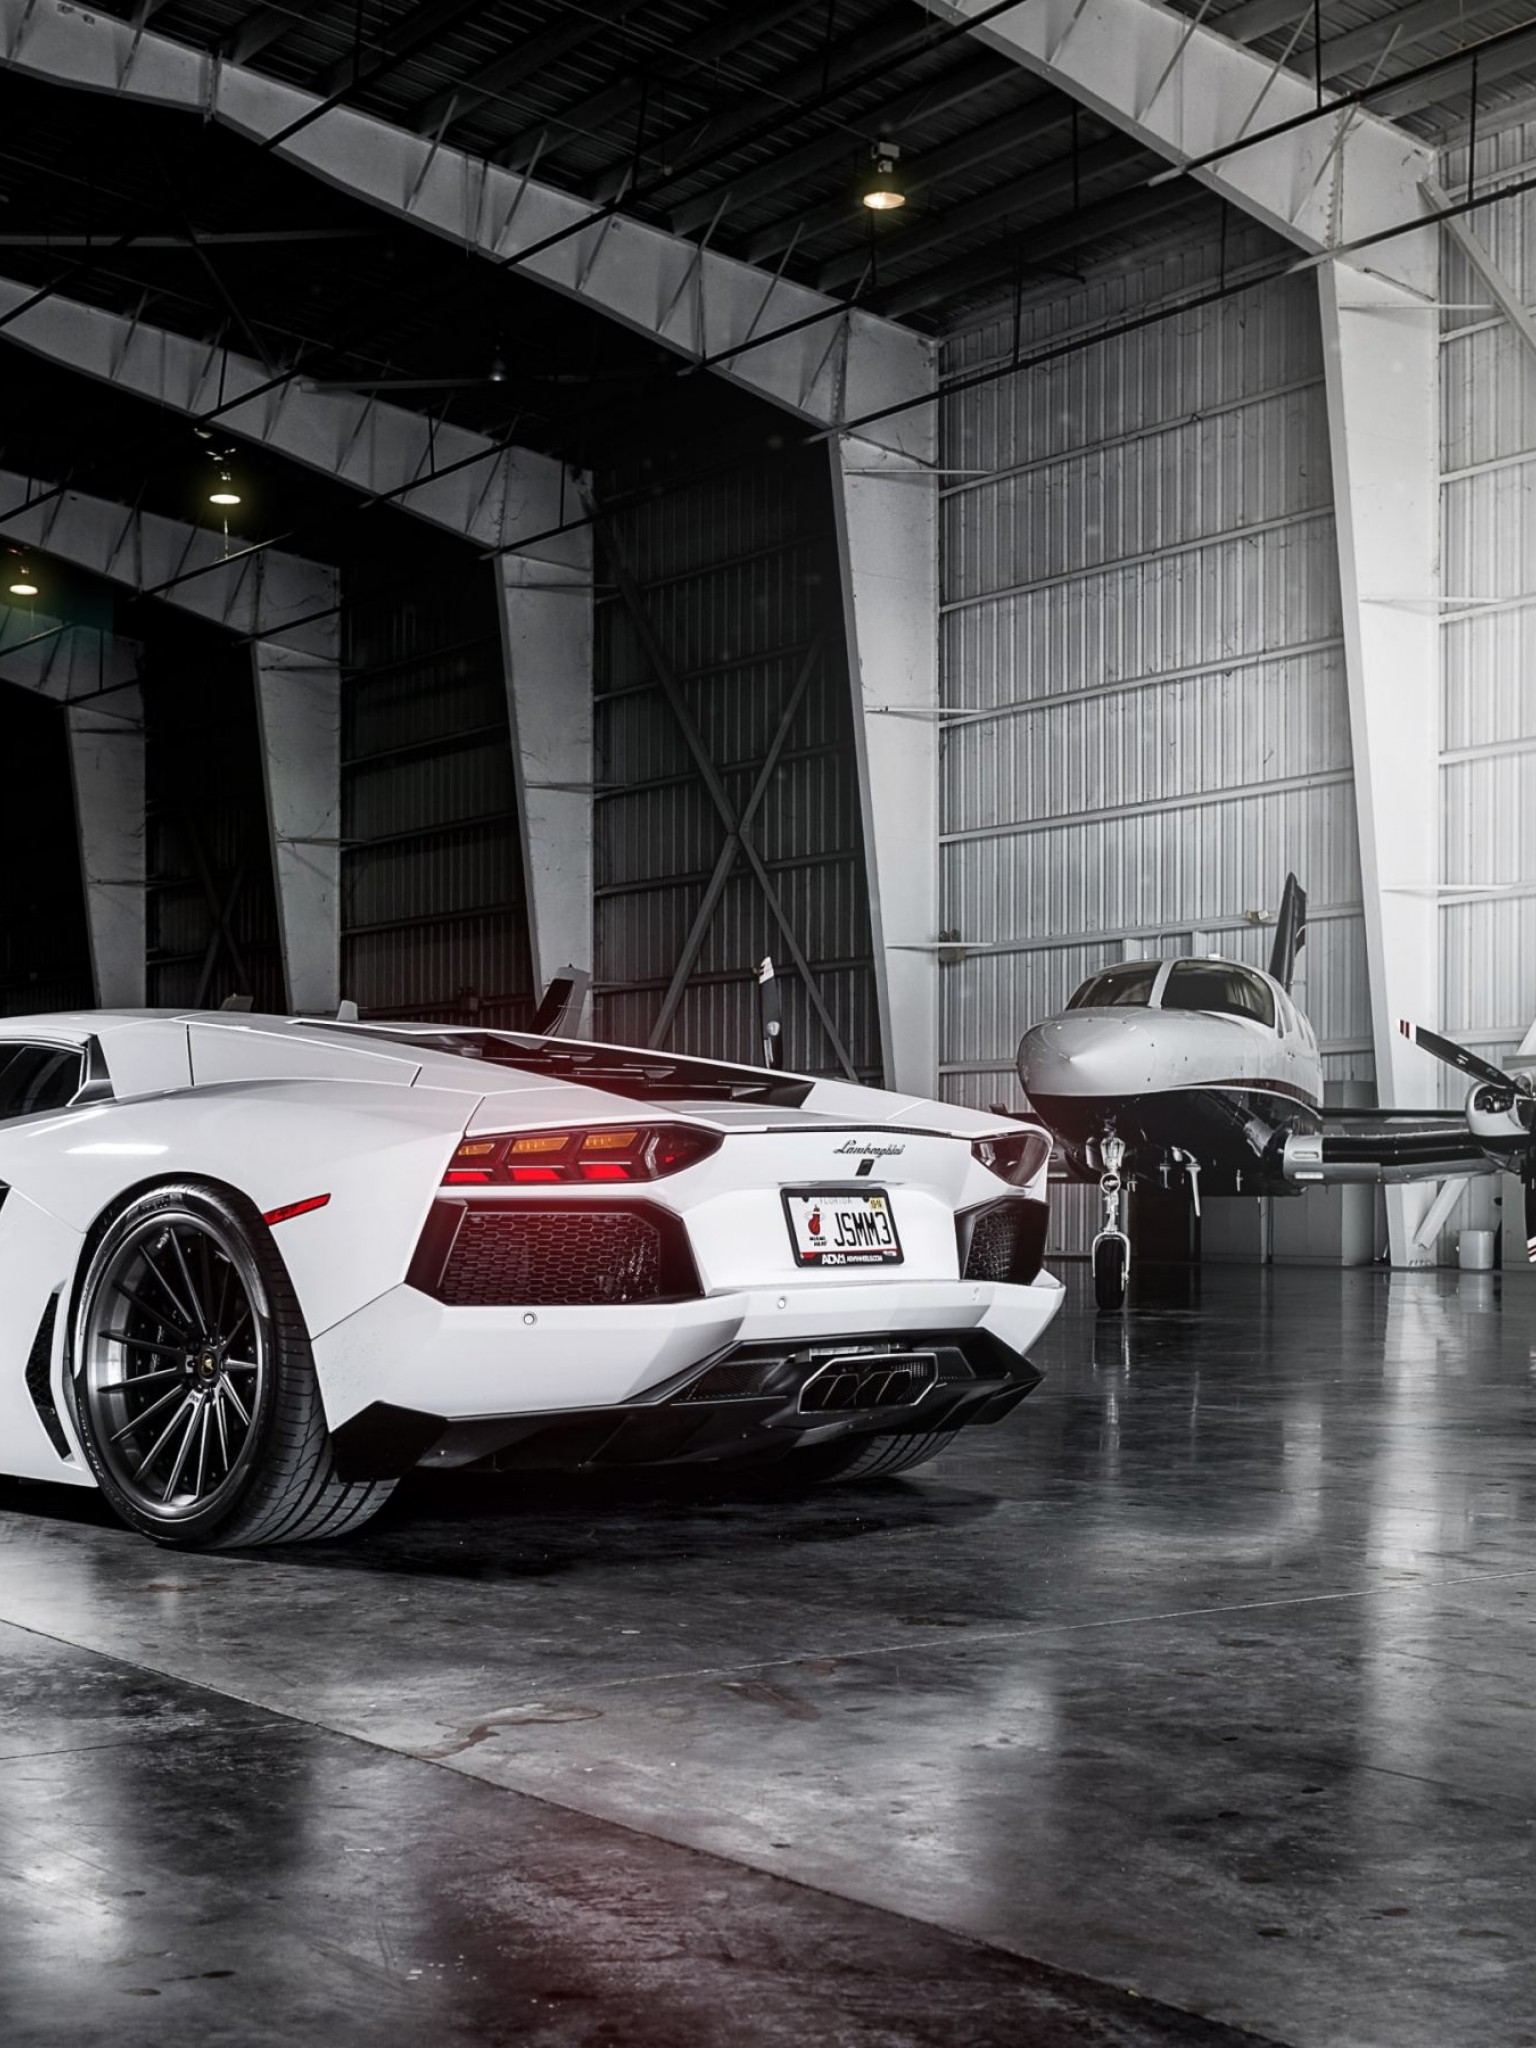 White Lamborghini Aventador Full Hd Wallpaper for Desktop and Mobiles